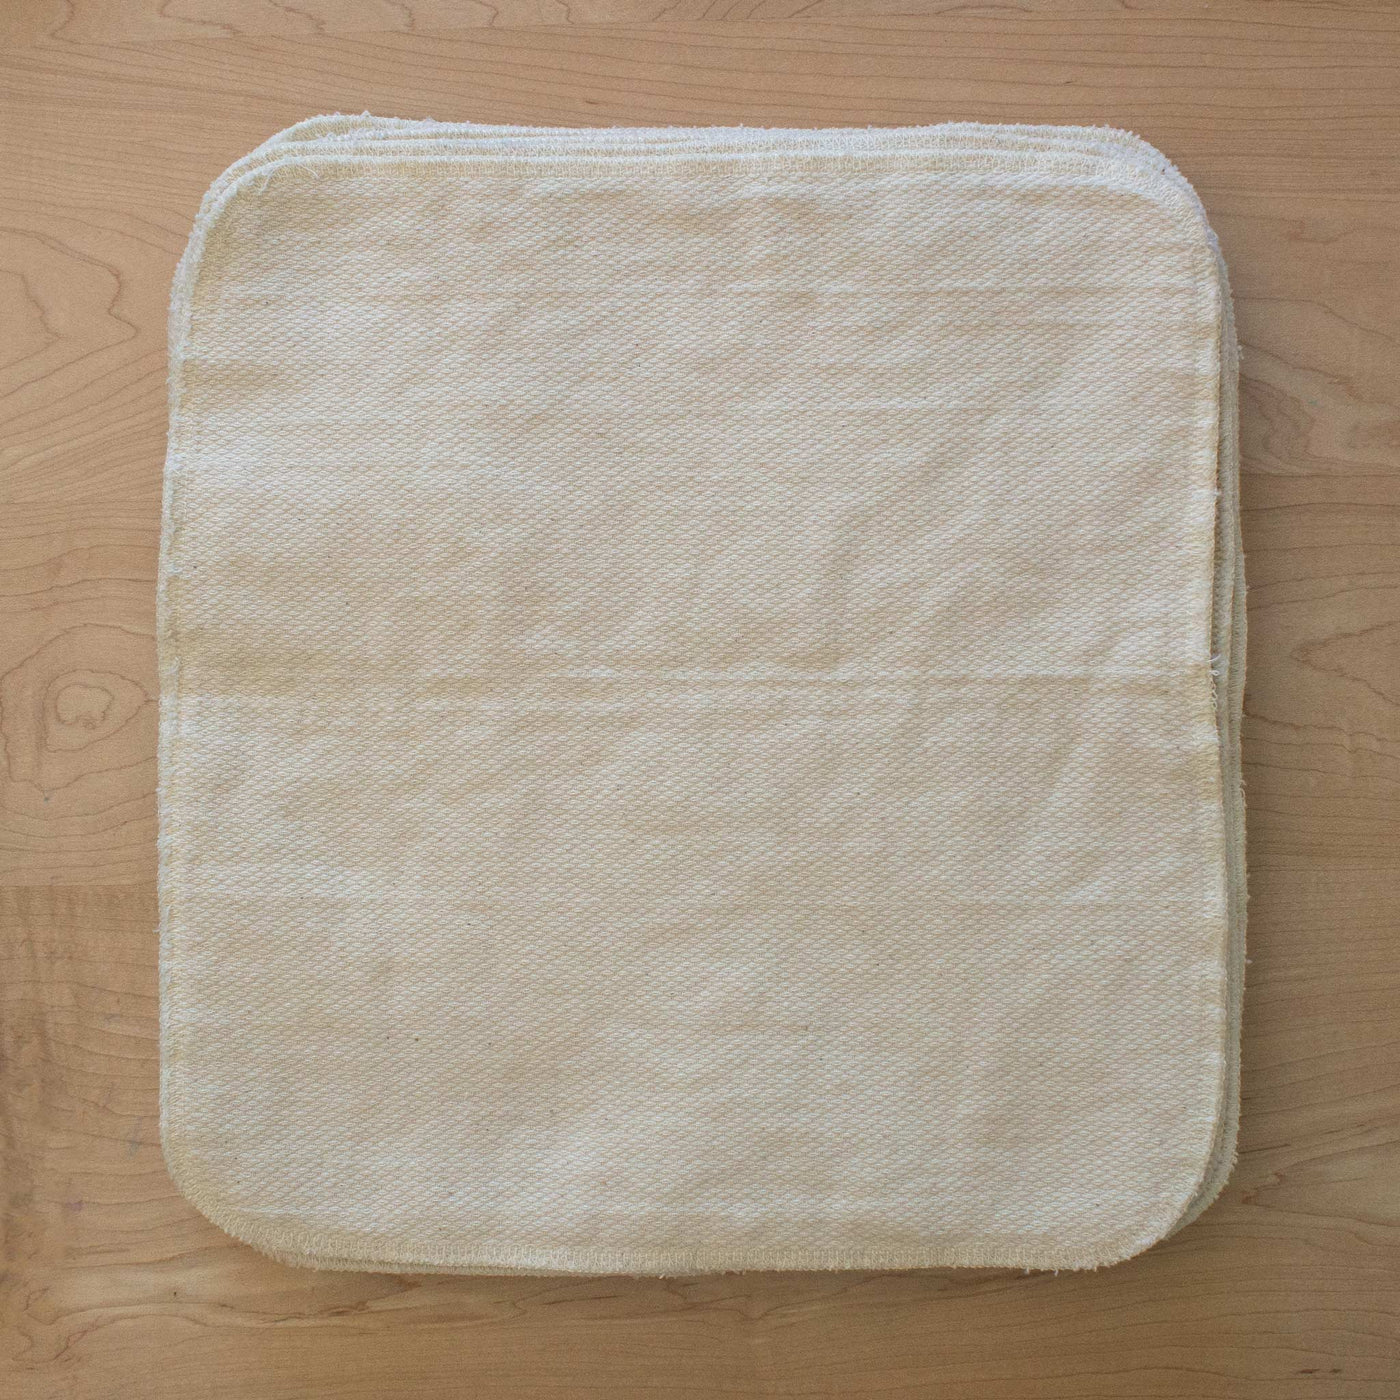 Cloth-eez Paper Towel Alternative Kit - Natural Unbleached